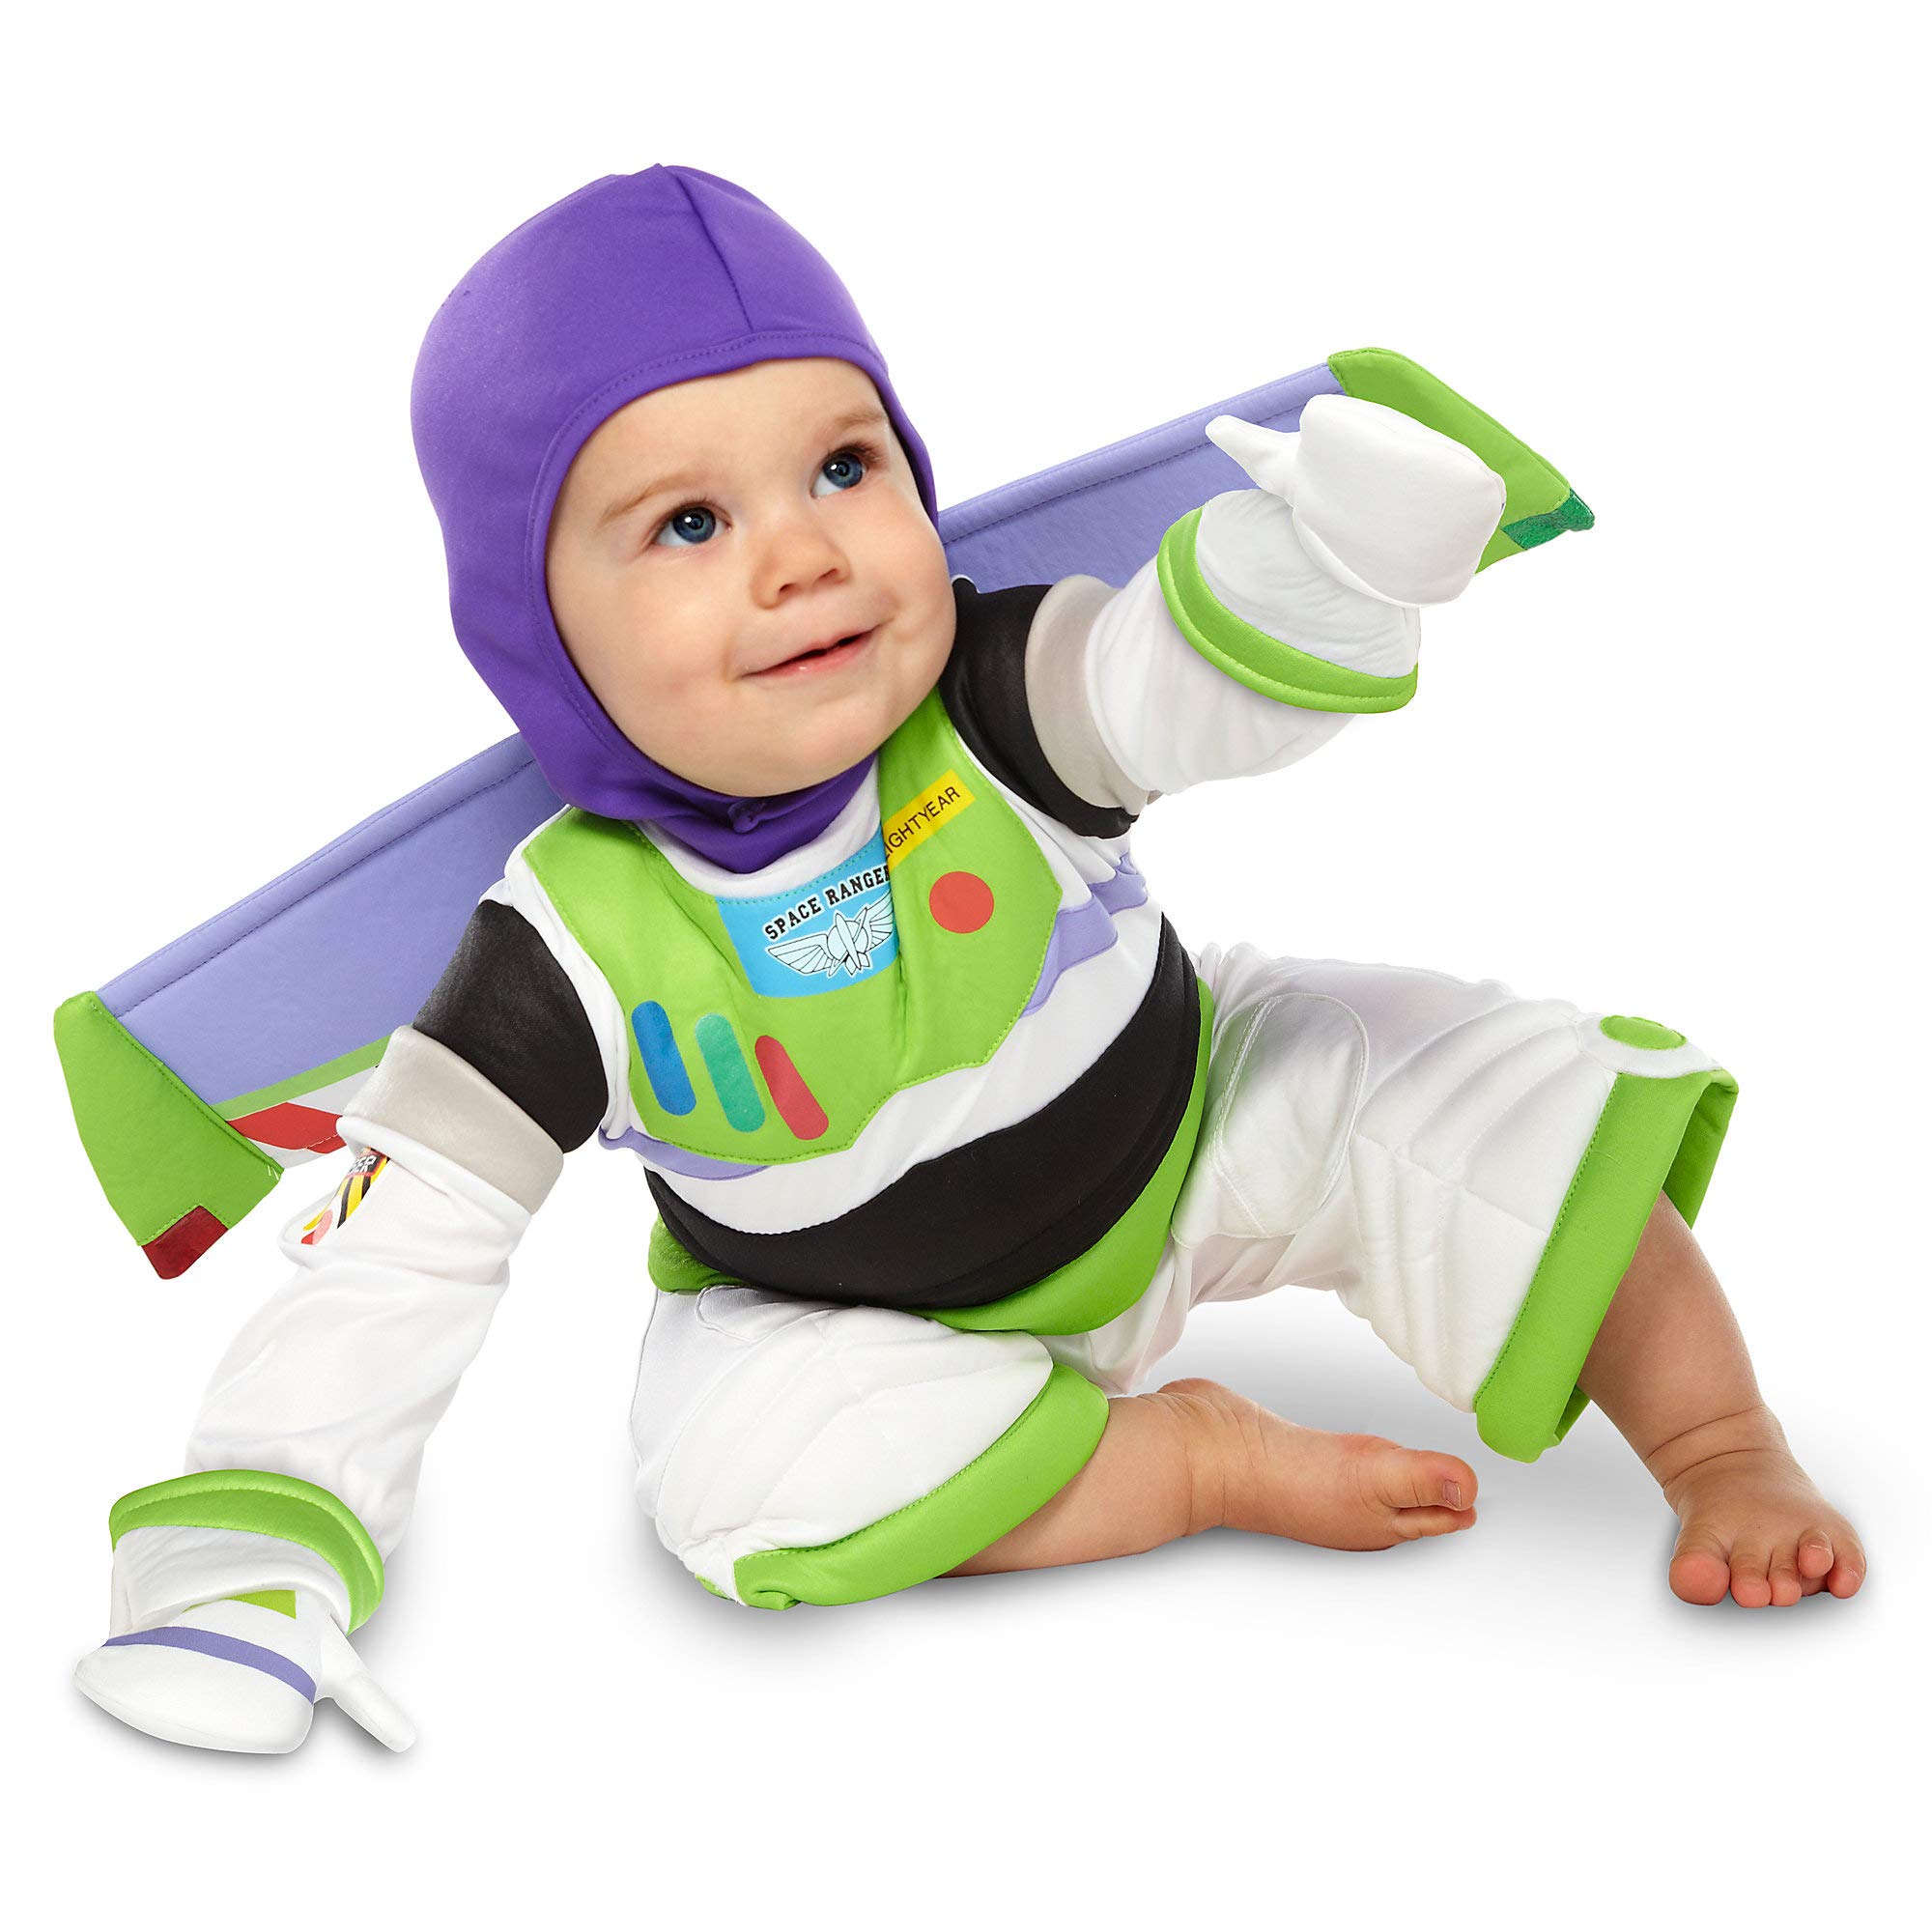 Disney Pixar Buzz Lightyear Costume for Baby Toy Story - size 12-18 MO